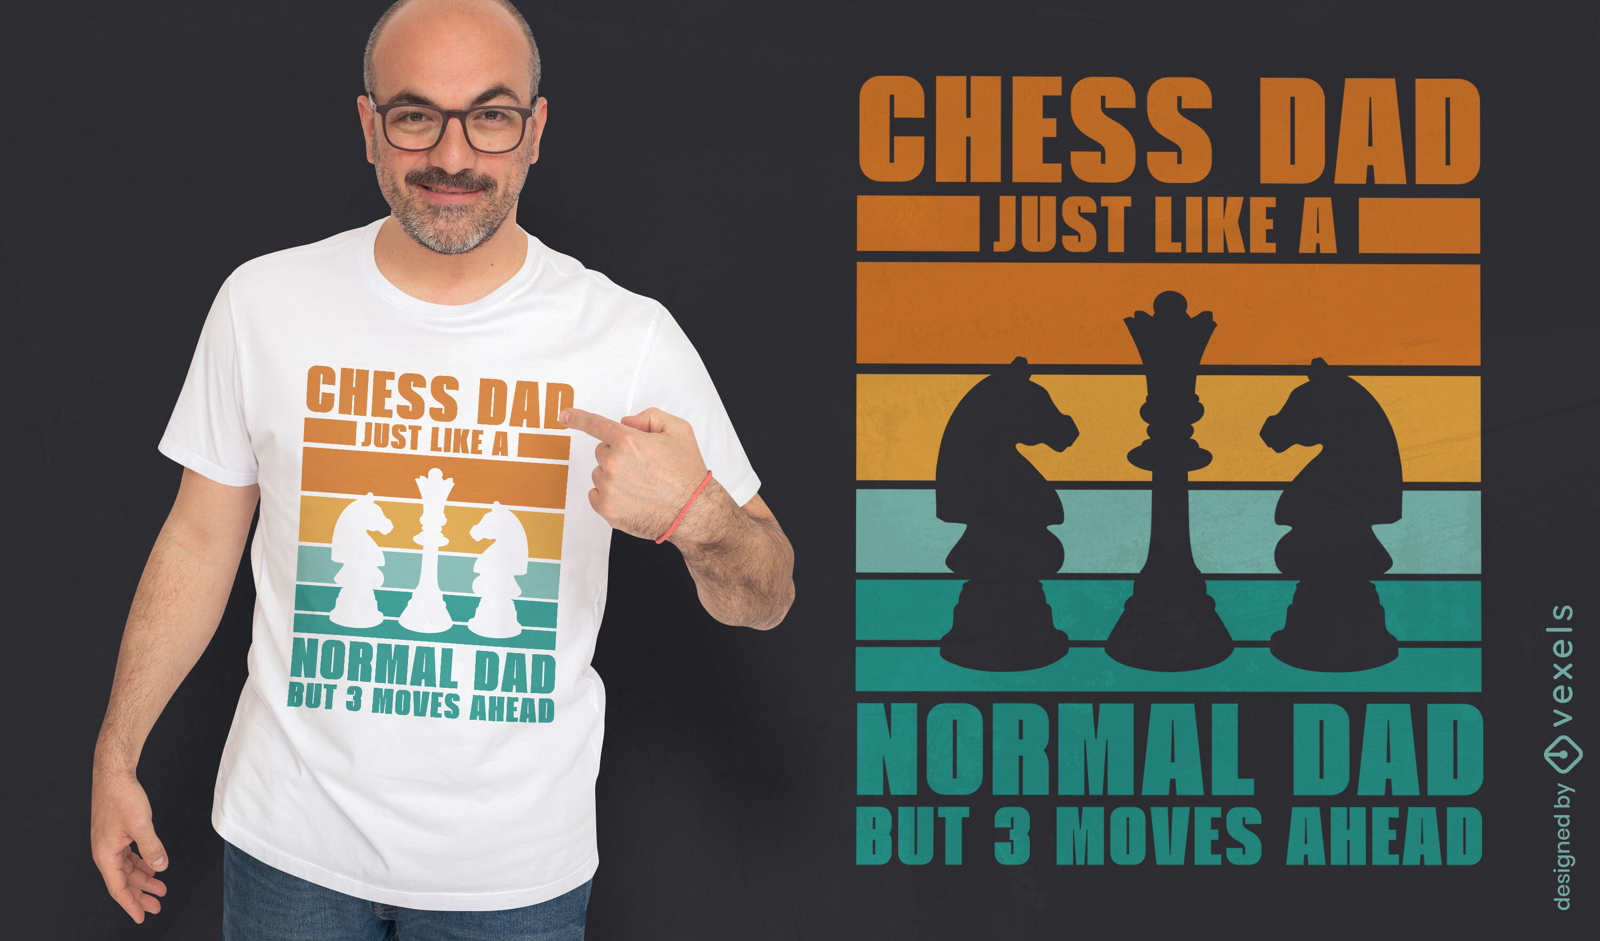 Chess dad t-shirt design